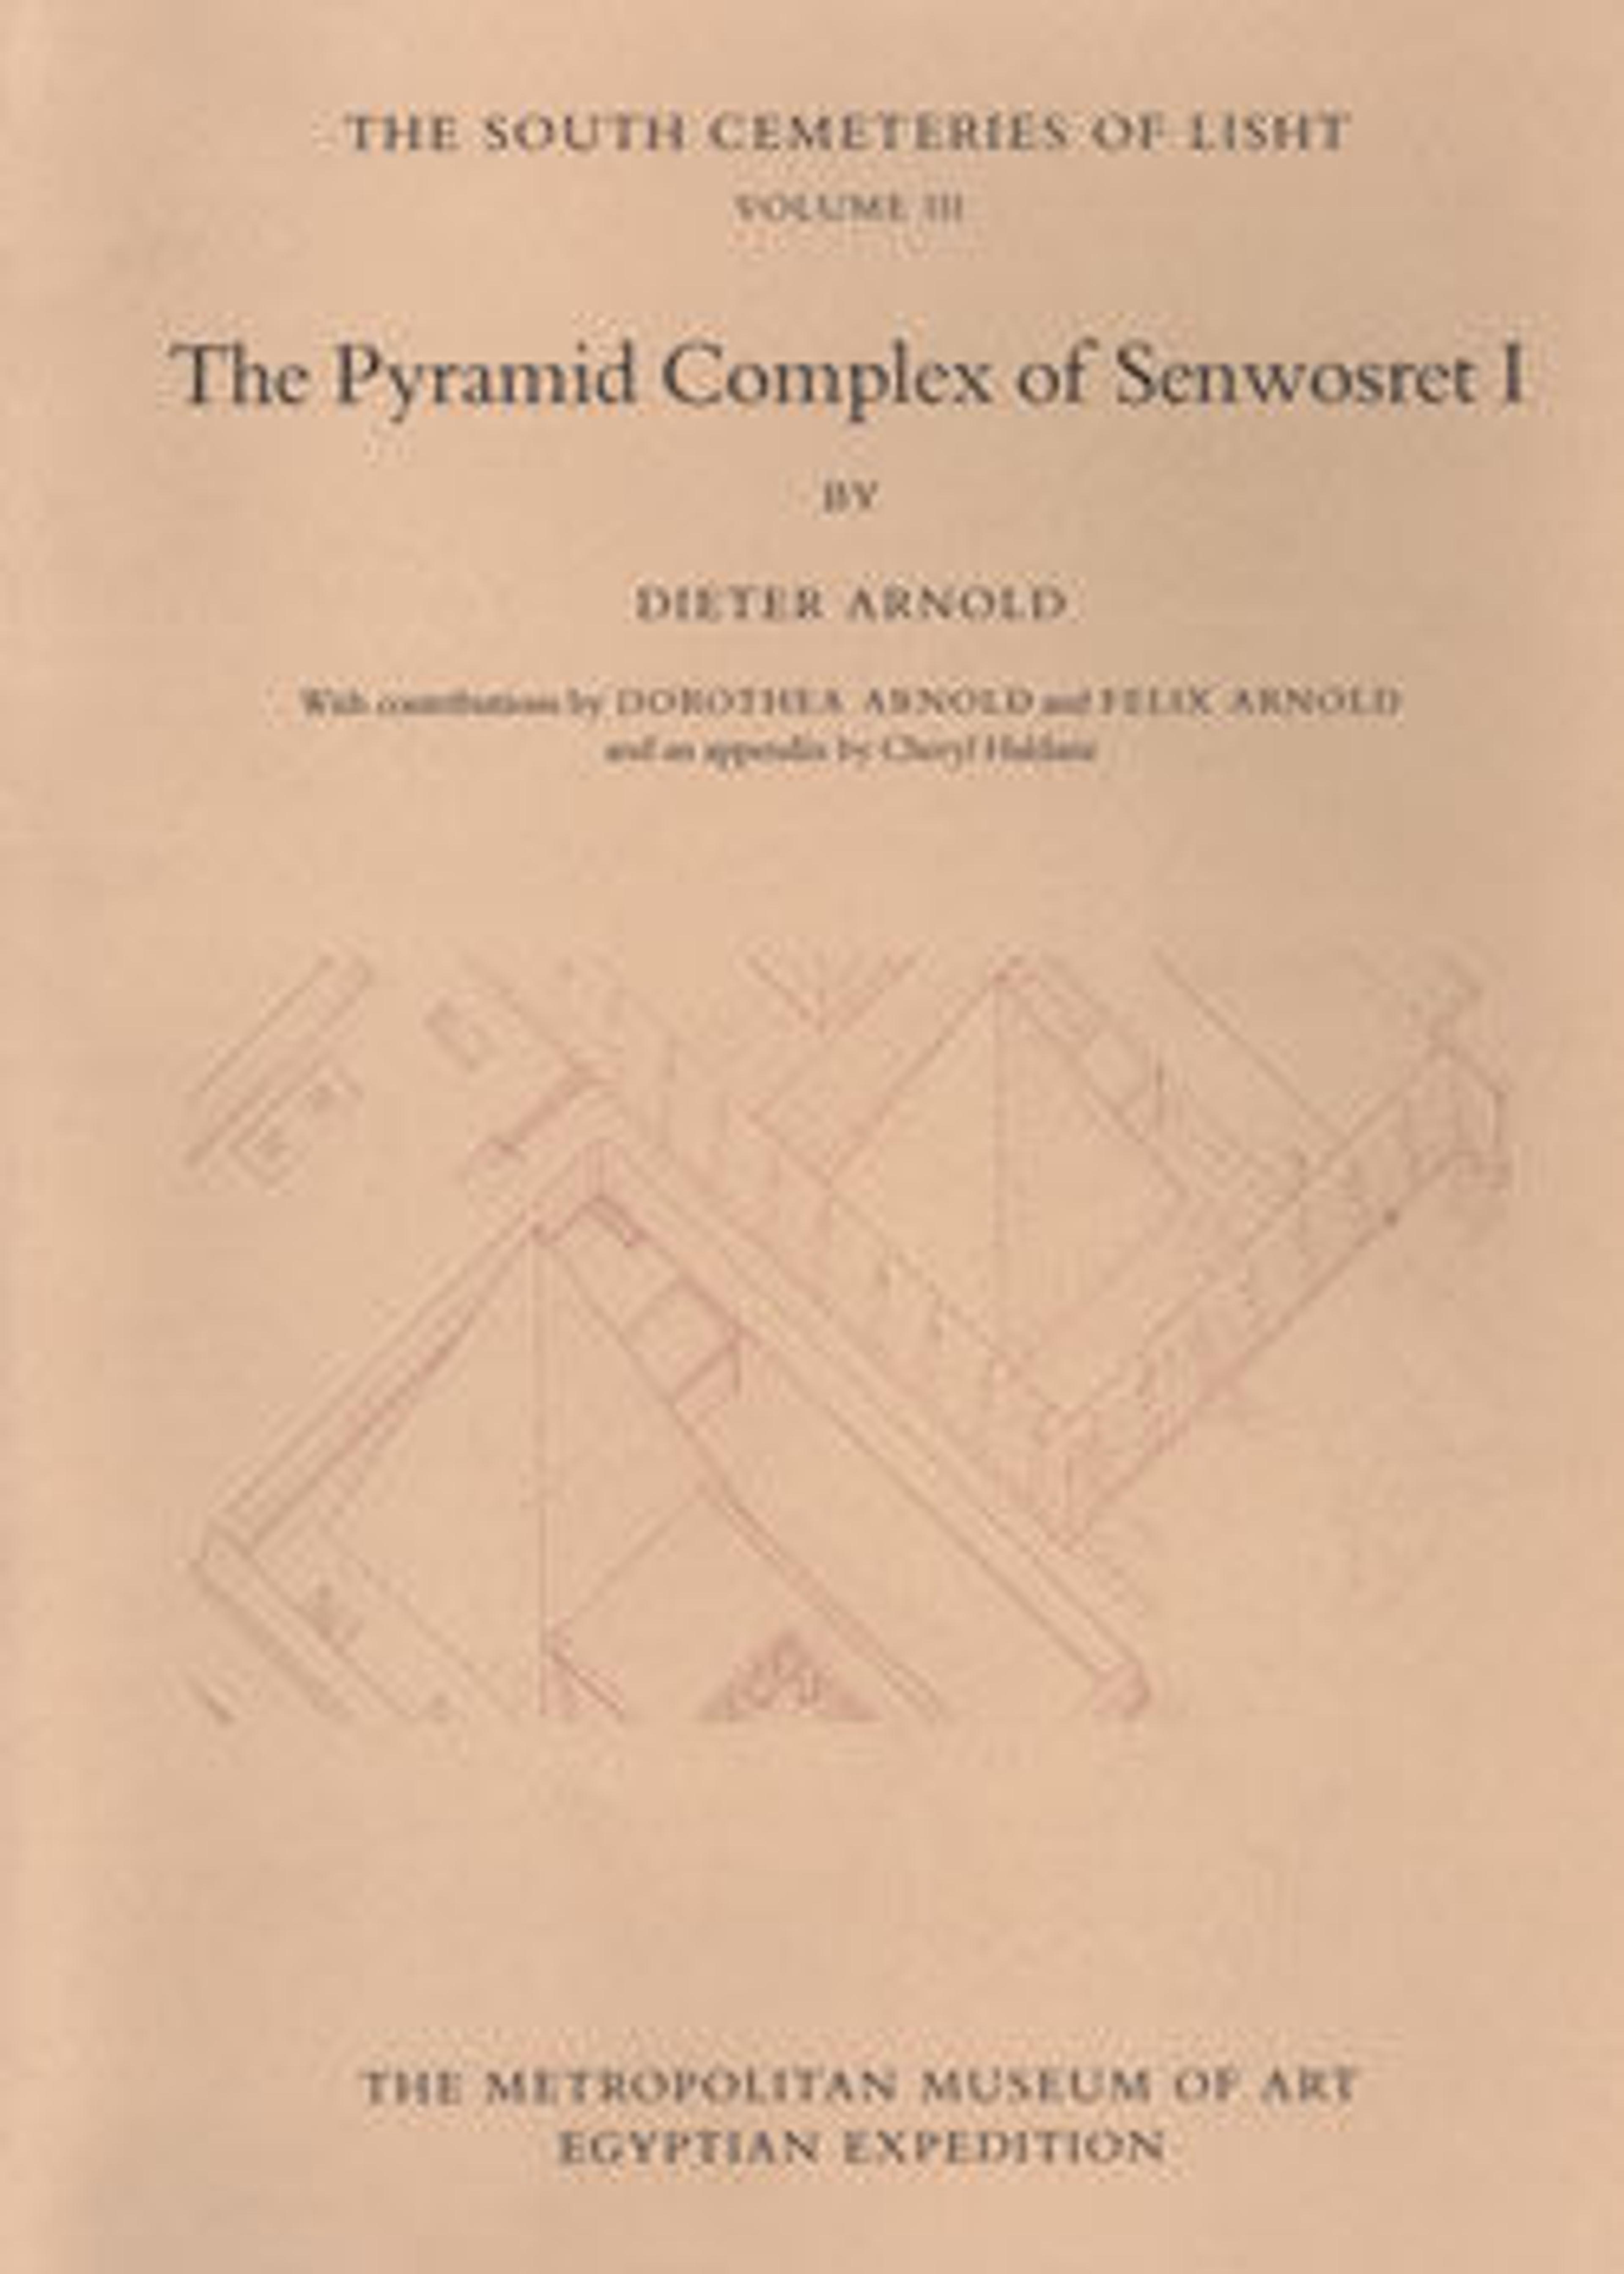 The Pyramid Complex of Senwosret I